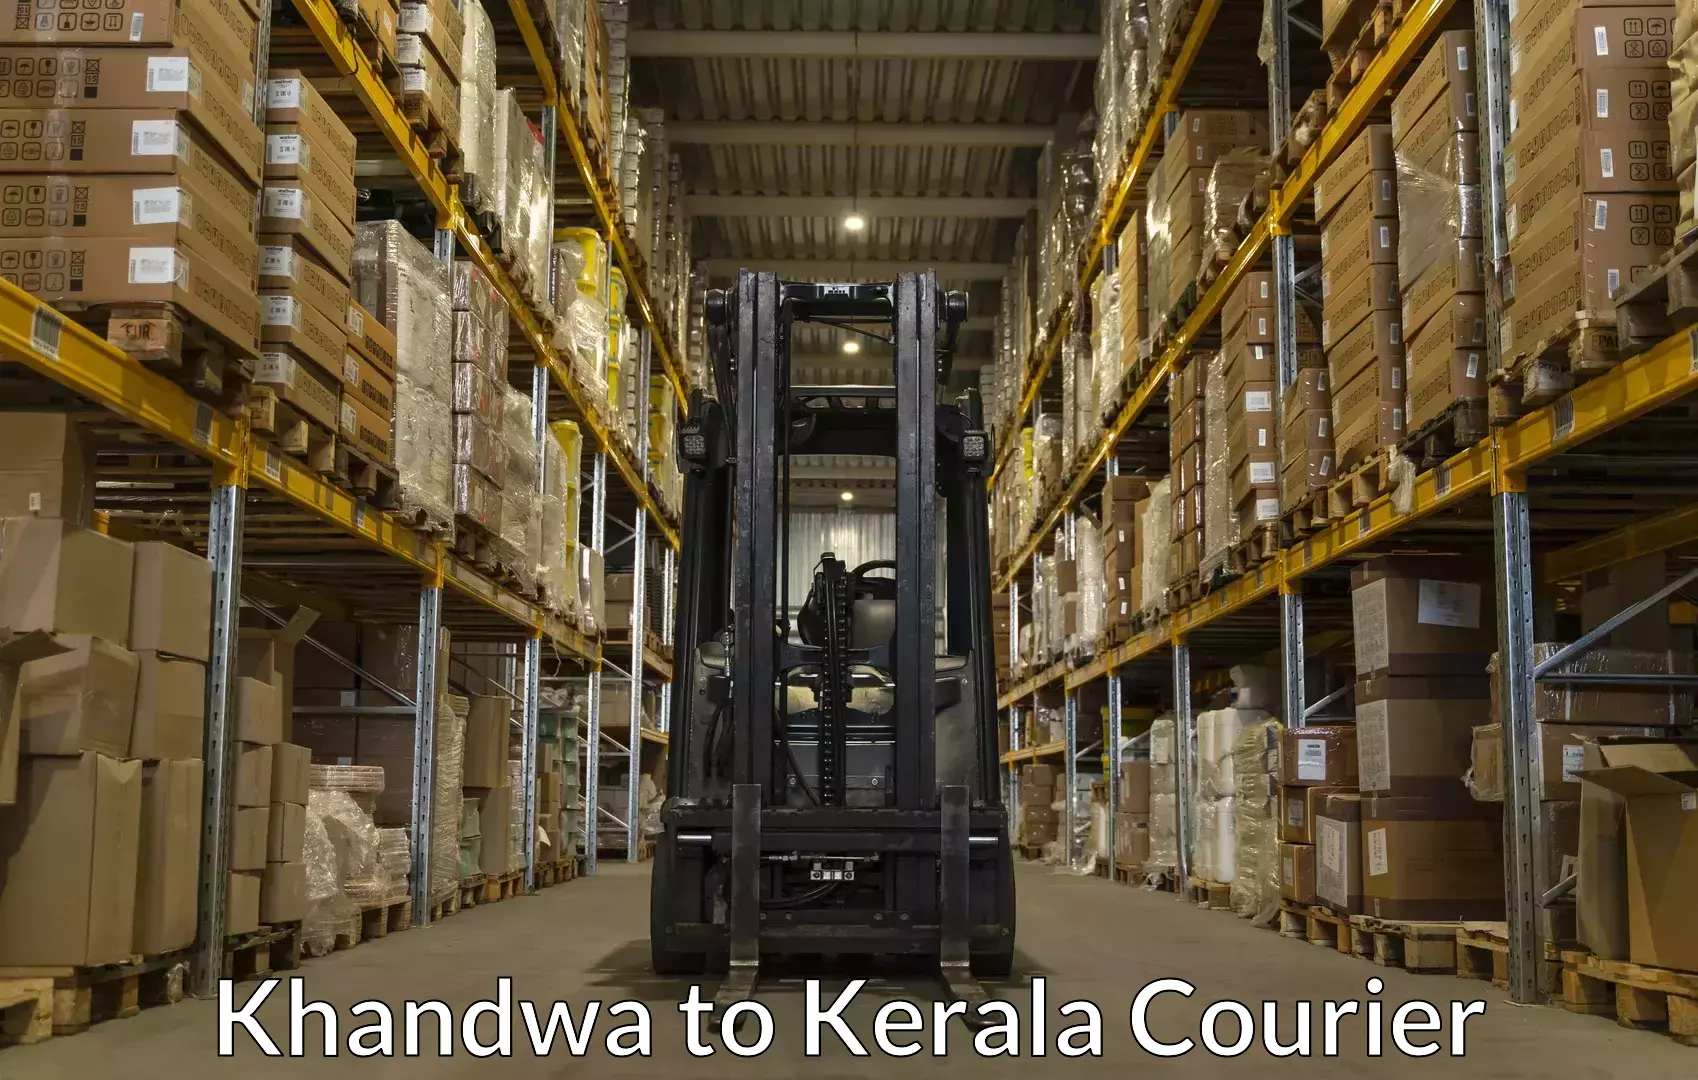 Baggage relocation service Khandwa to Kerala